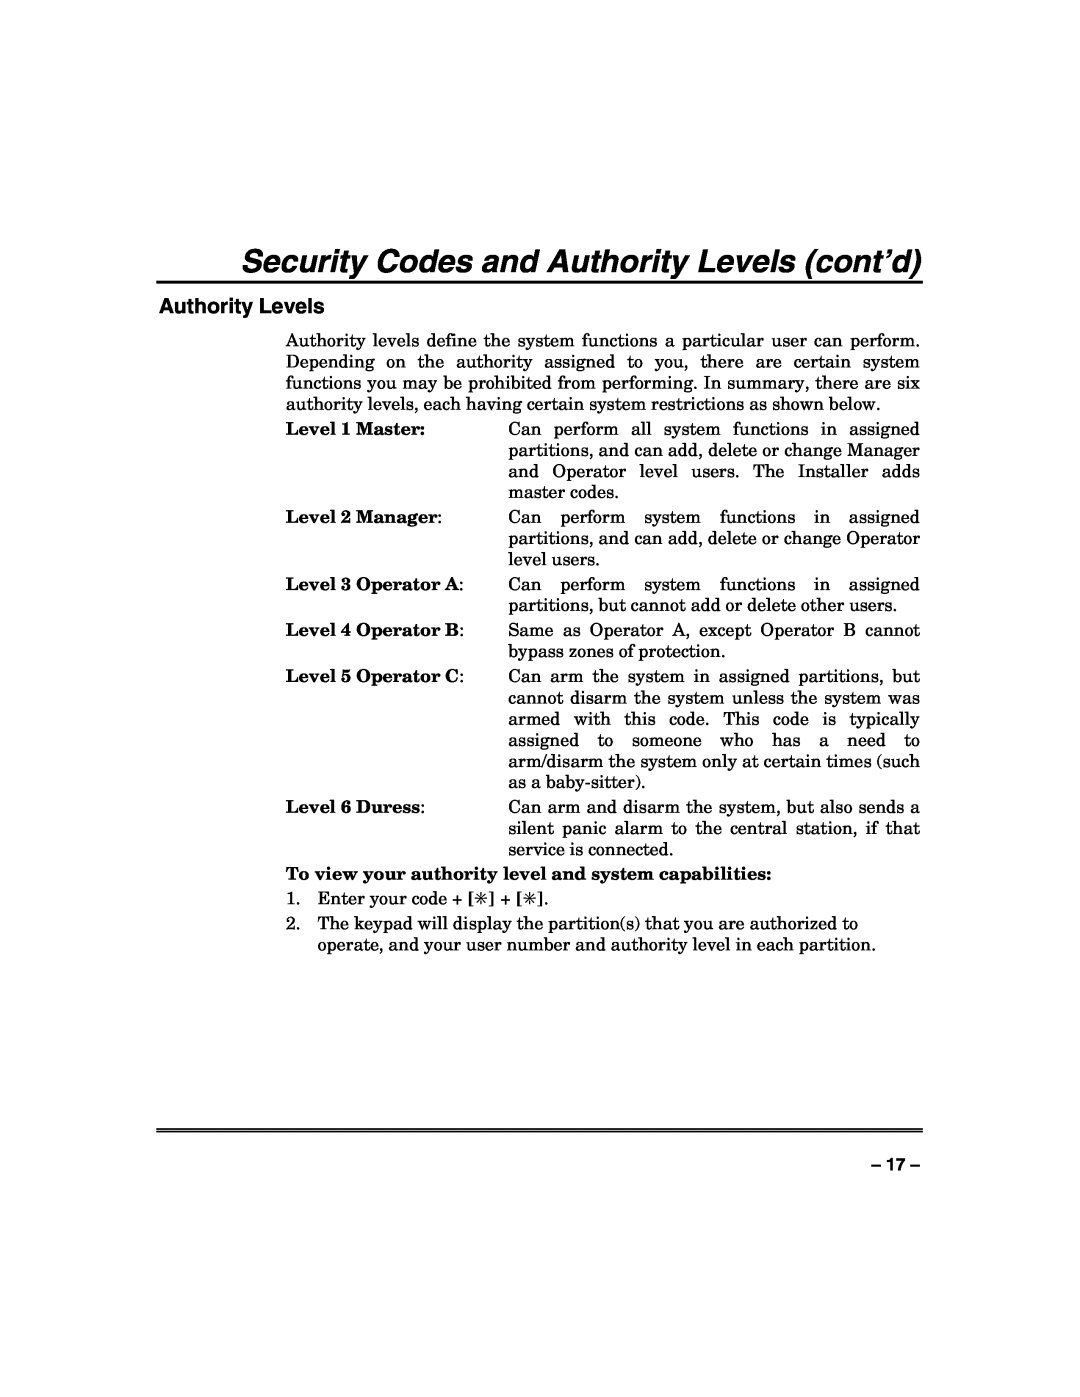 Honeywell VISTA-128FBP, VISTA-250FBP manual Security Codes and Authority Levels cont’d 